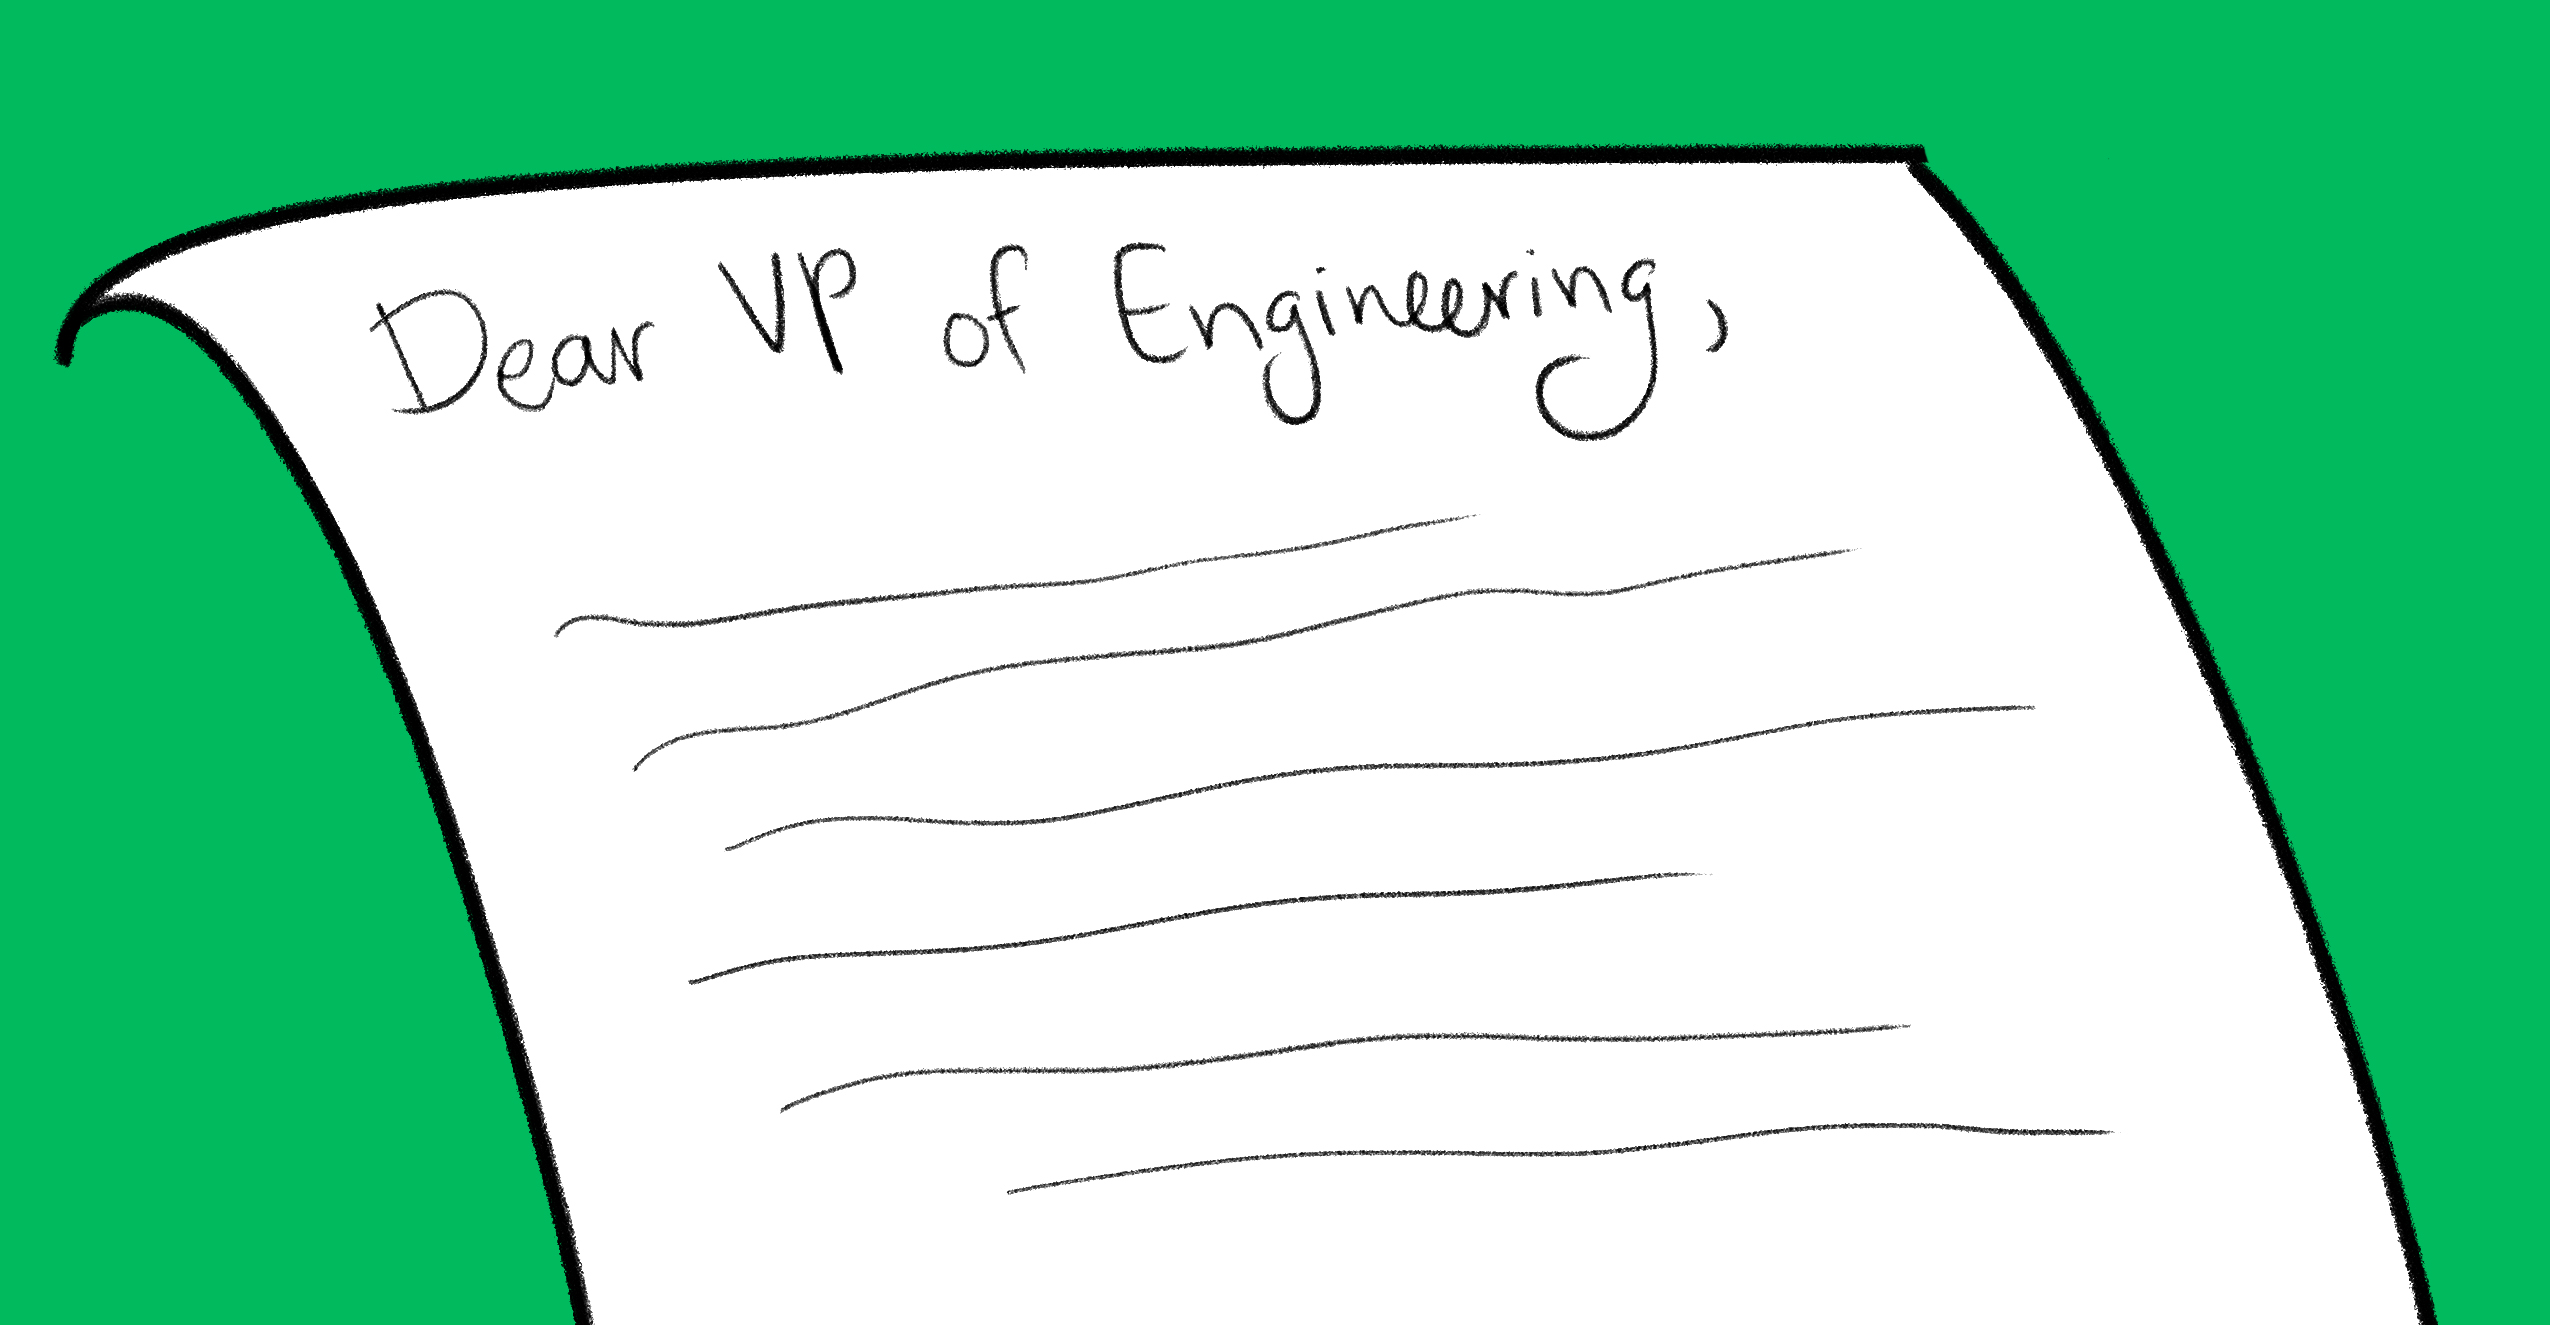 Dear VP of Engineering